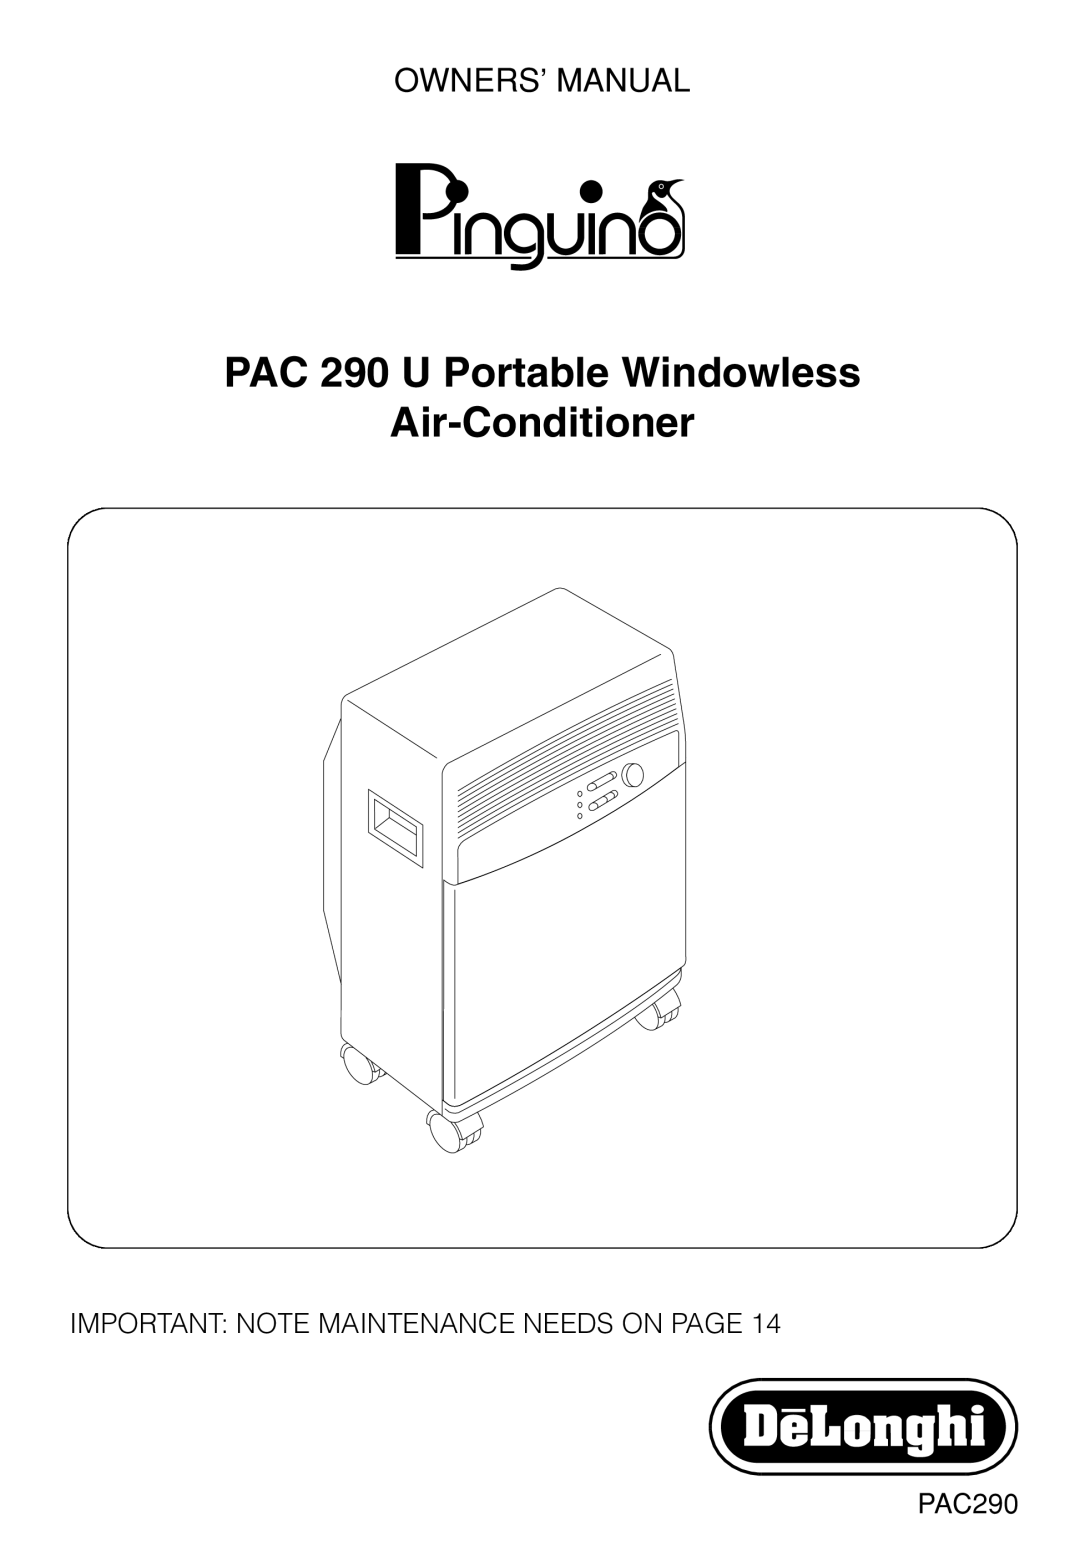 DeLonghi owner manual PAC 290 U Portable Windowless Air-Conditioner, Owners’ Manual, PAC290 